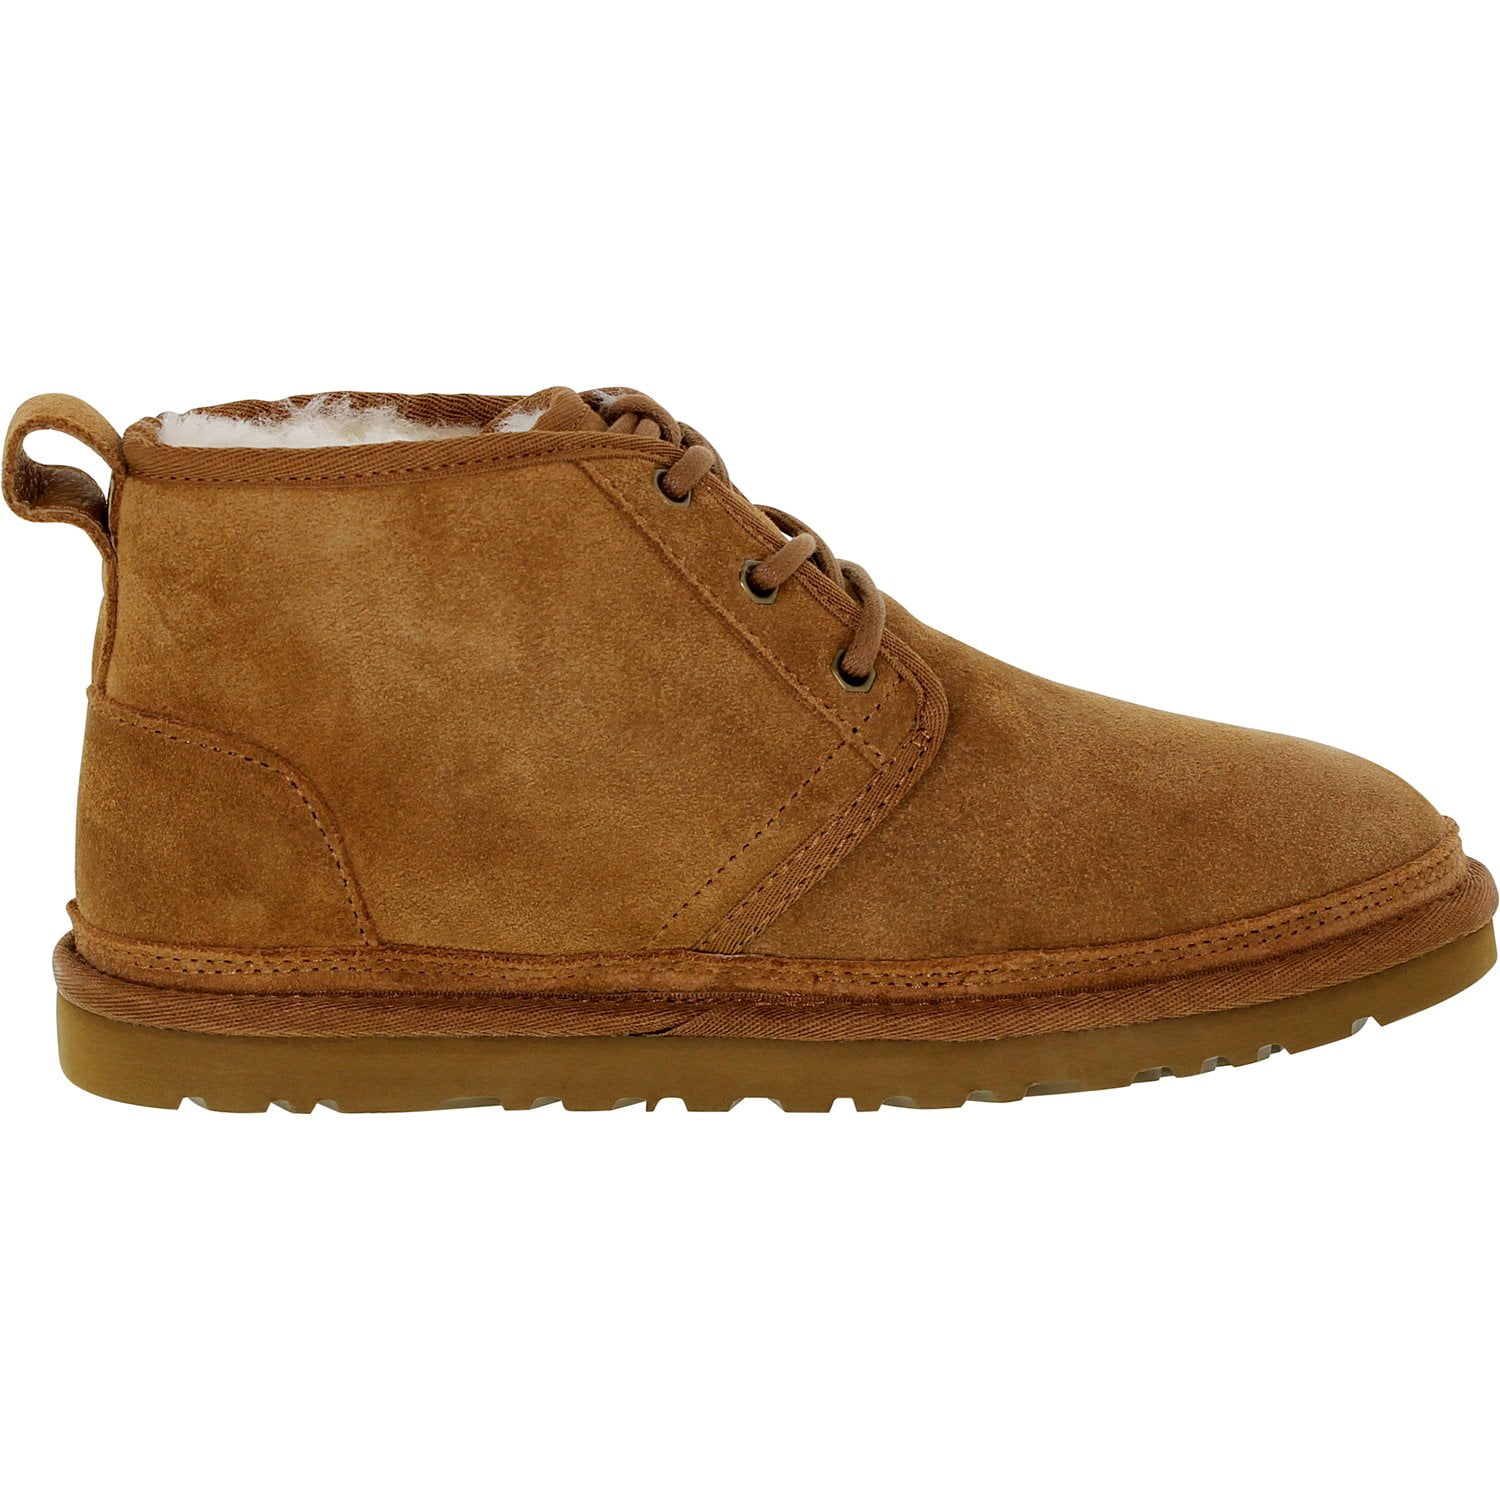 Ugg Men's Neumel Chestnut Ankle-High Leather Boot - 12M | Walmart Canada